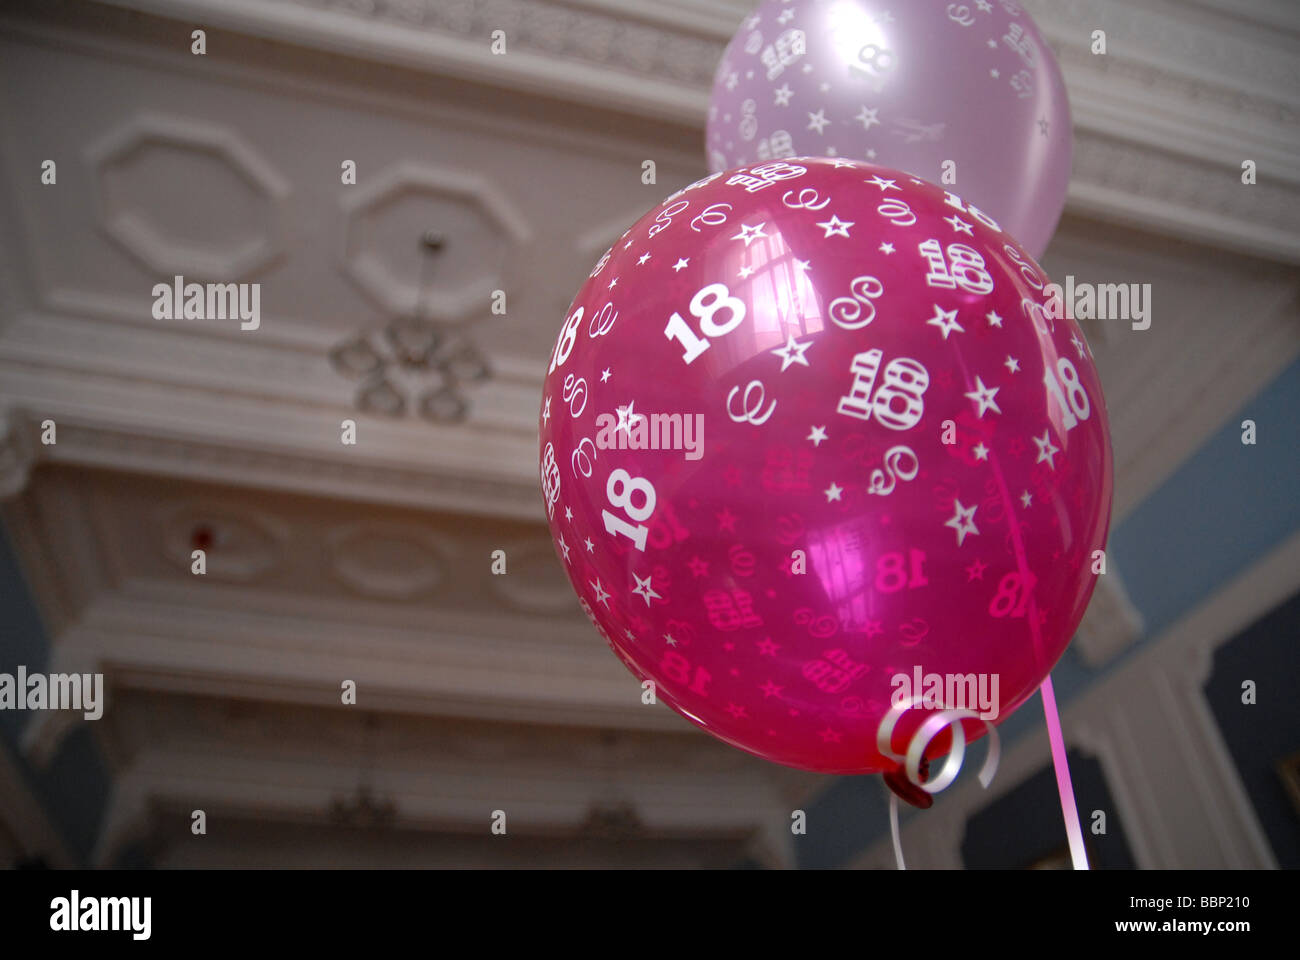 An 18th Birthday Balloon. Stock Photo